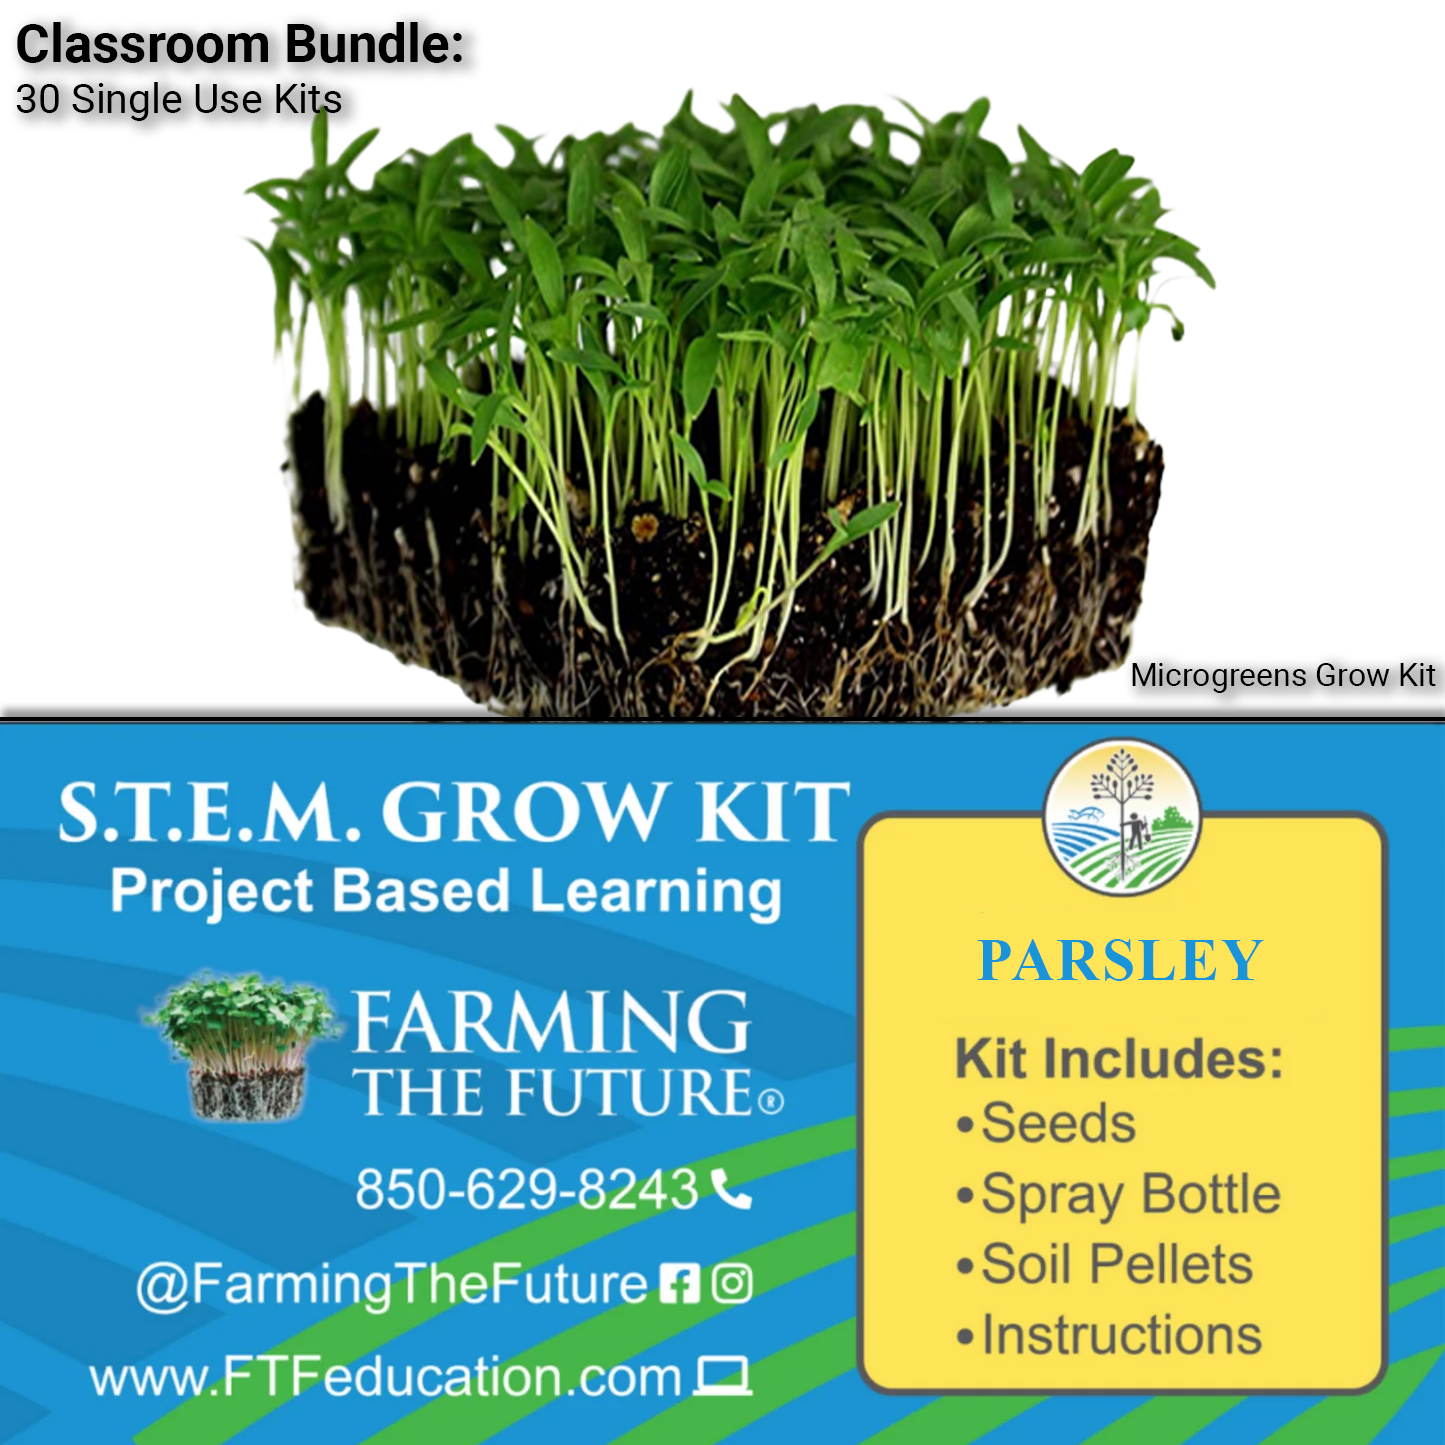 K-12 STEM Student Parsley Microgreen Kit - Classroom Bundle